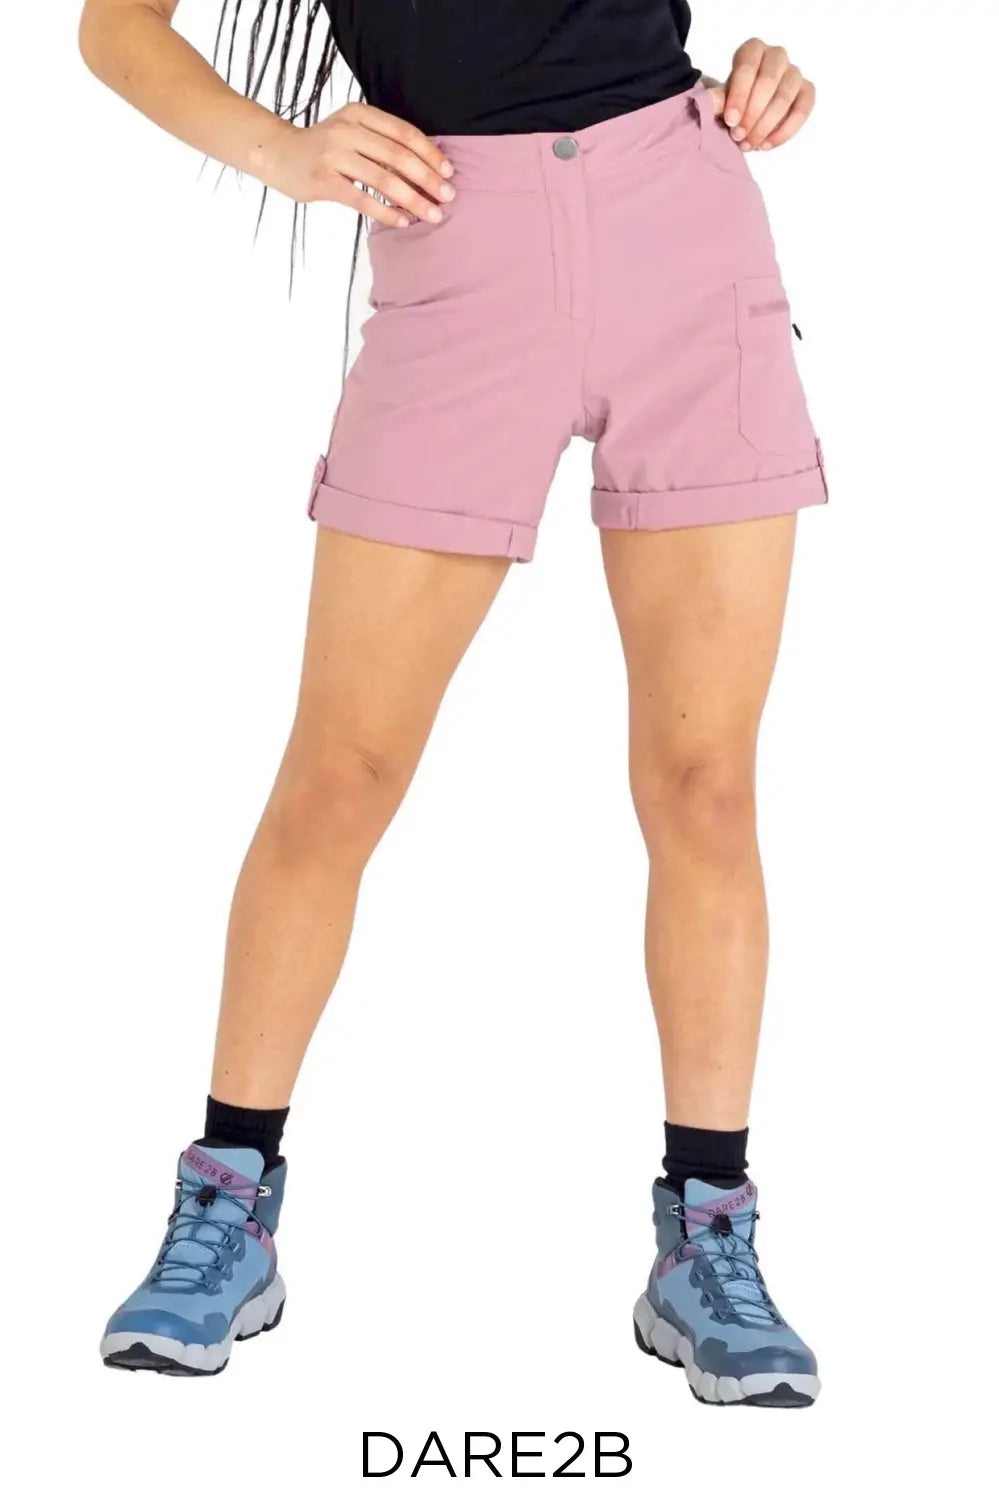 Dare2B Womens Sports Shorts Dusky Pink / 8